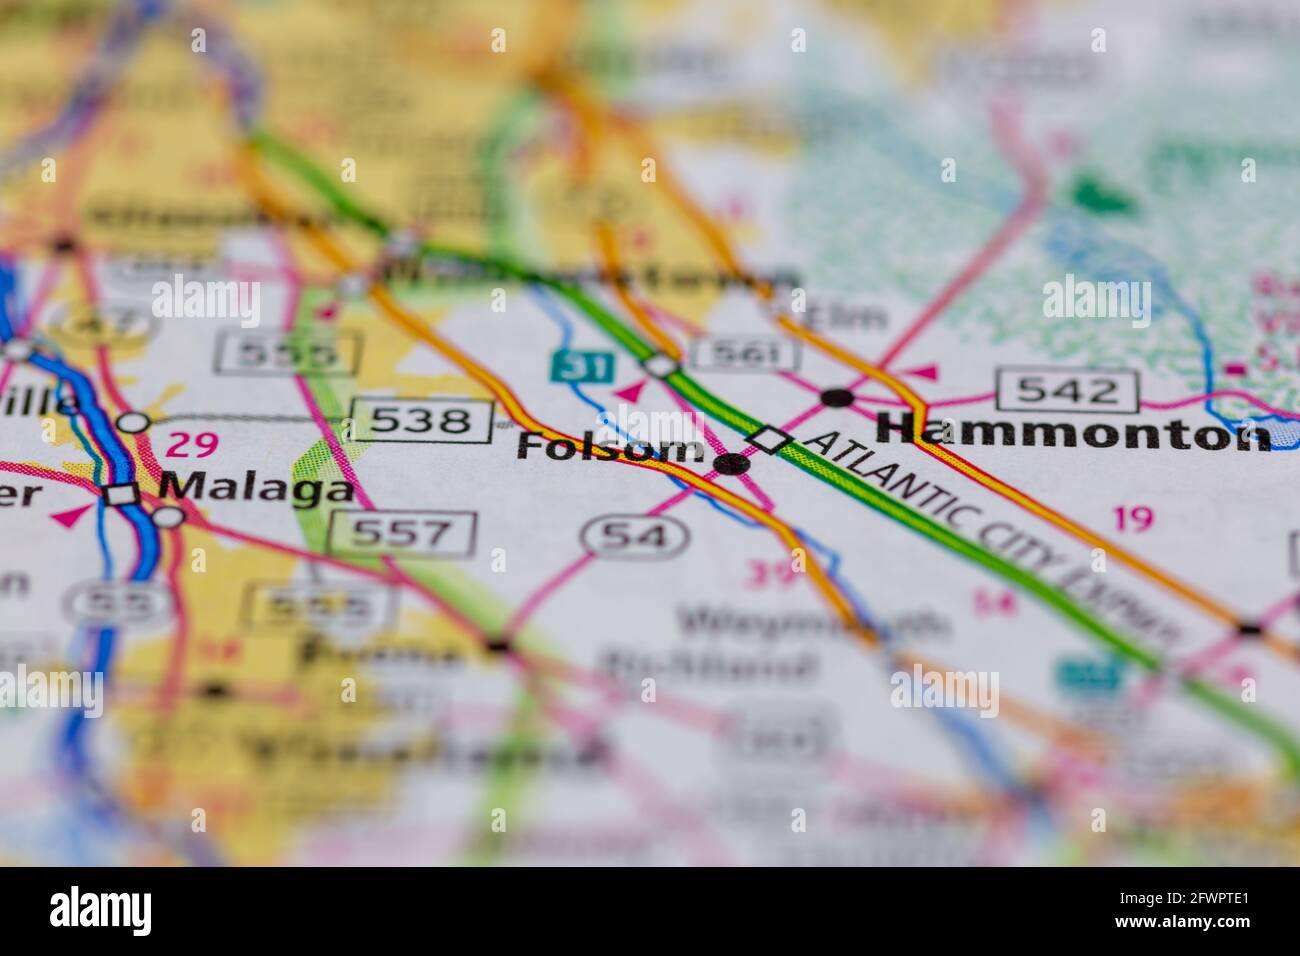 Folsom New Jersey Usa Mostrado En Un Mapa De Geografia O Hoja De Ruta 2fwpte1 